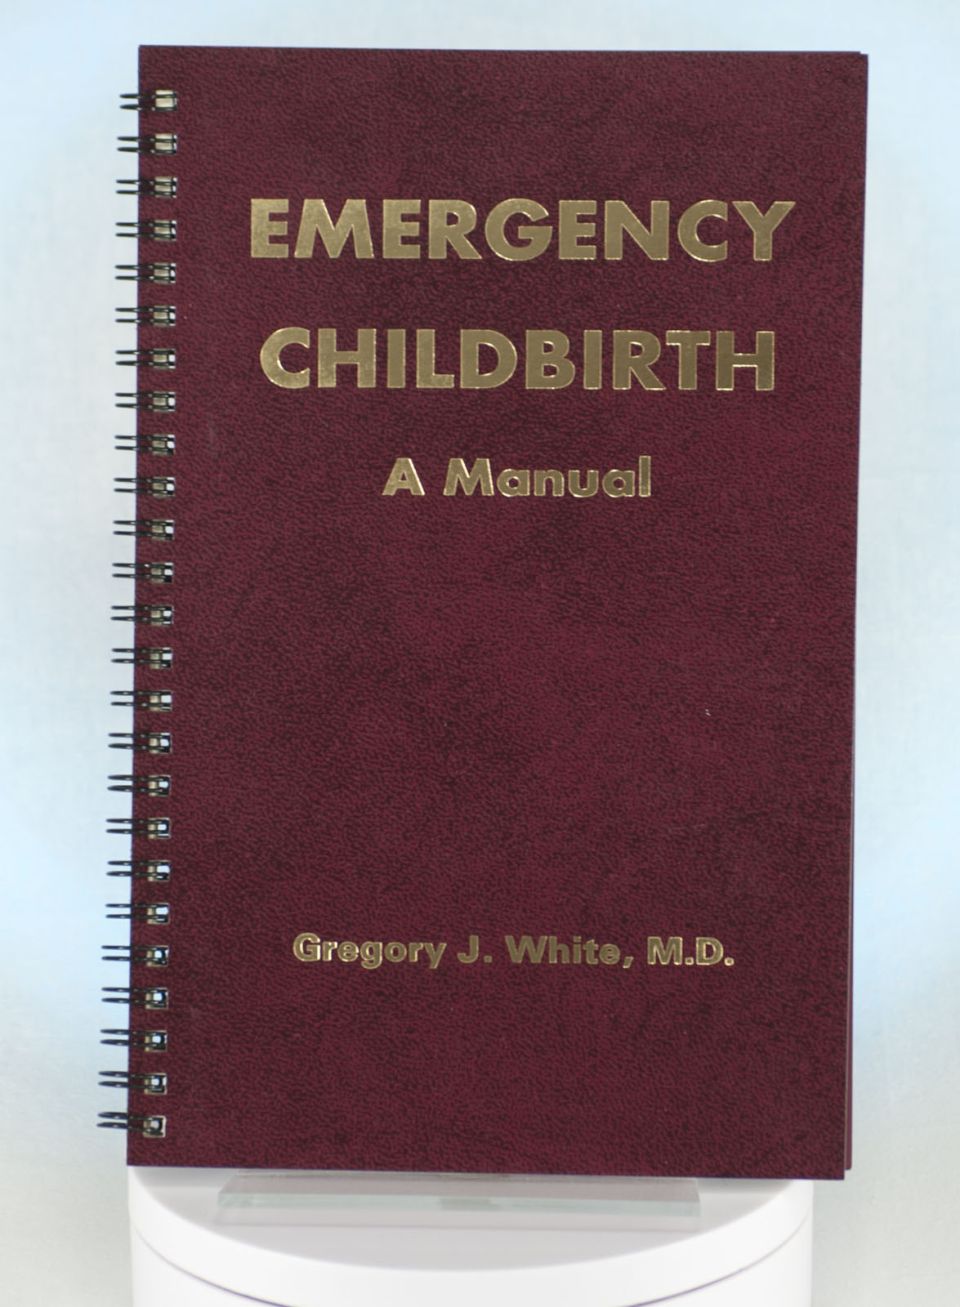 Emergency Childbirth by Gregory J White, M.D.